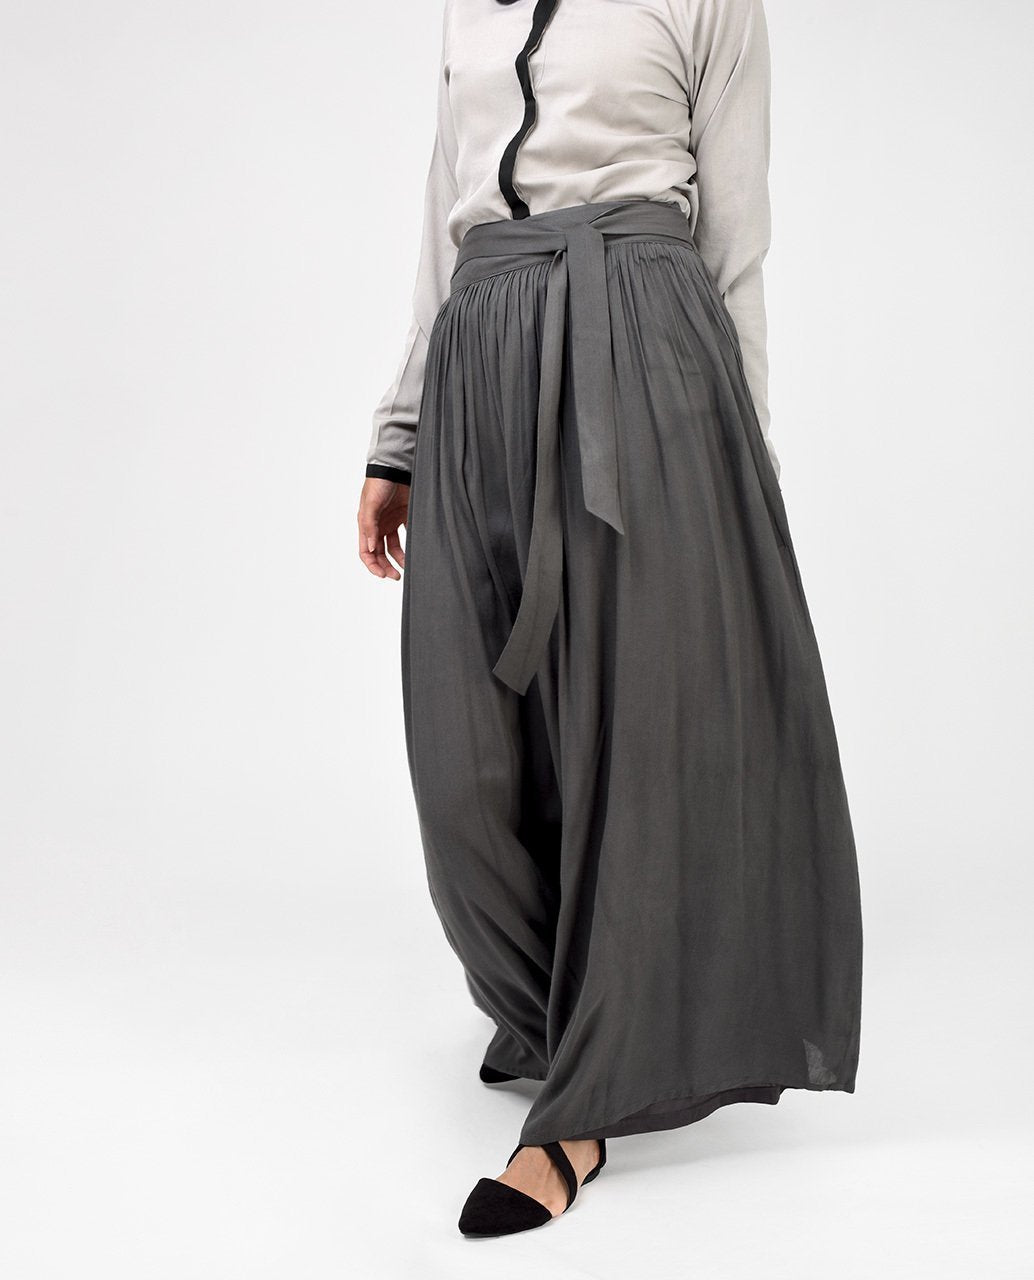 Charcoal Grey Skirt Slim (W28 L39) Charcoal Grey 